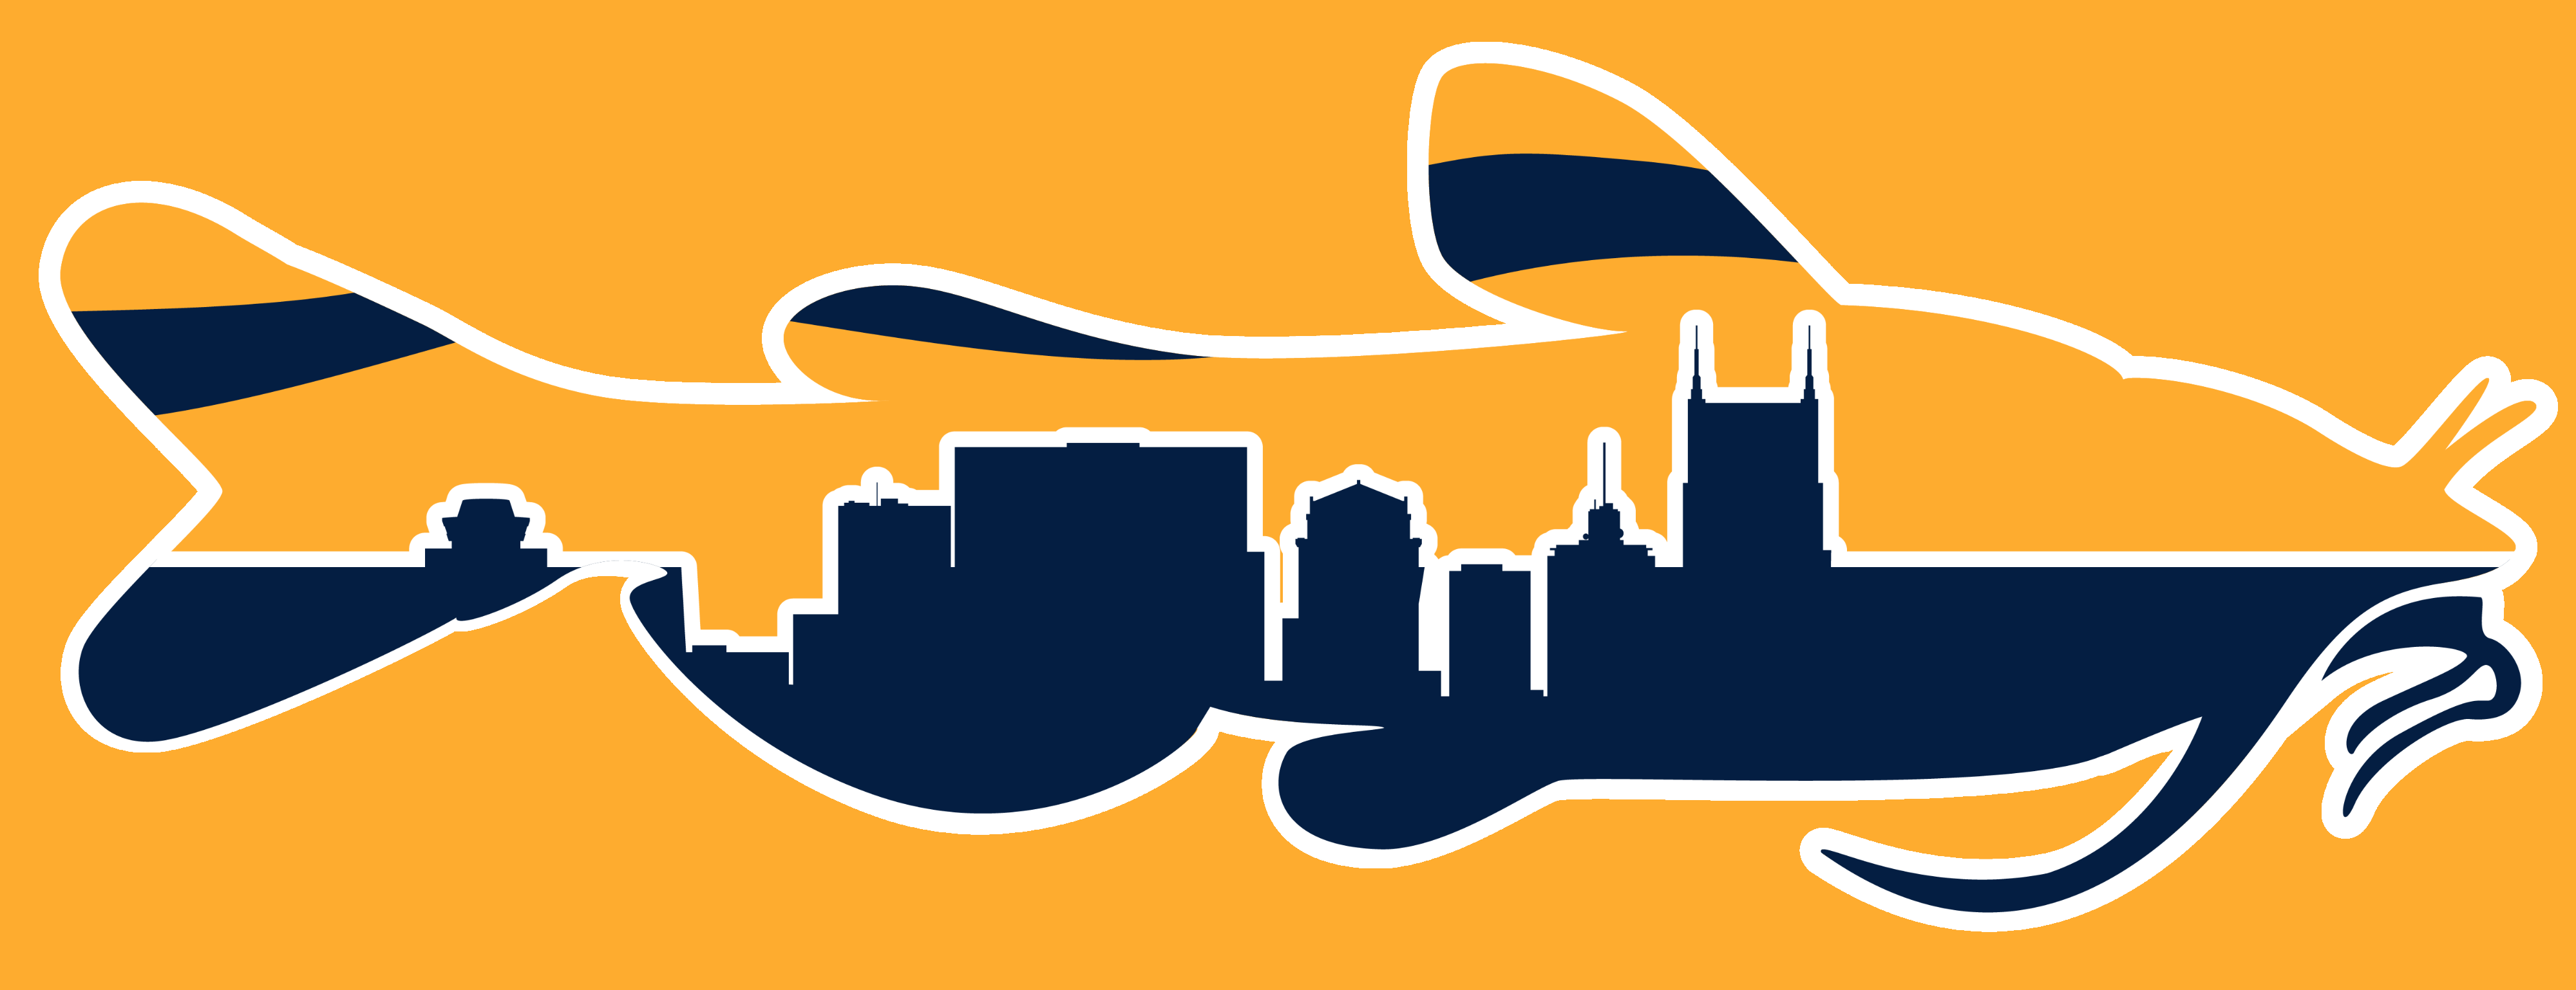 Catfish Logo - Check out this catfish logo I made